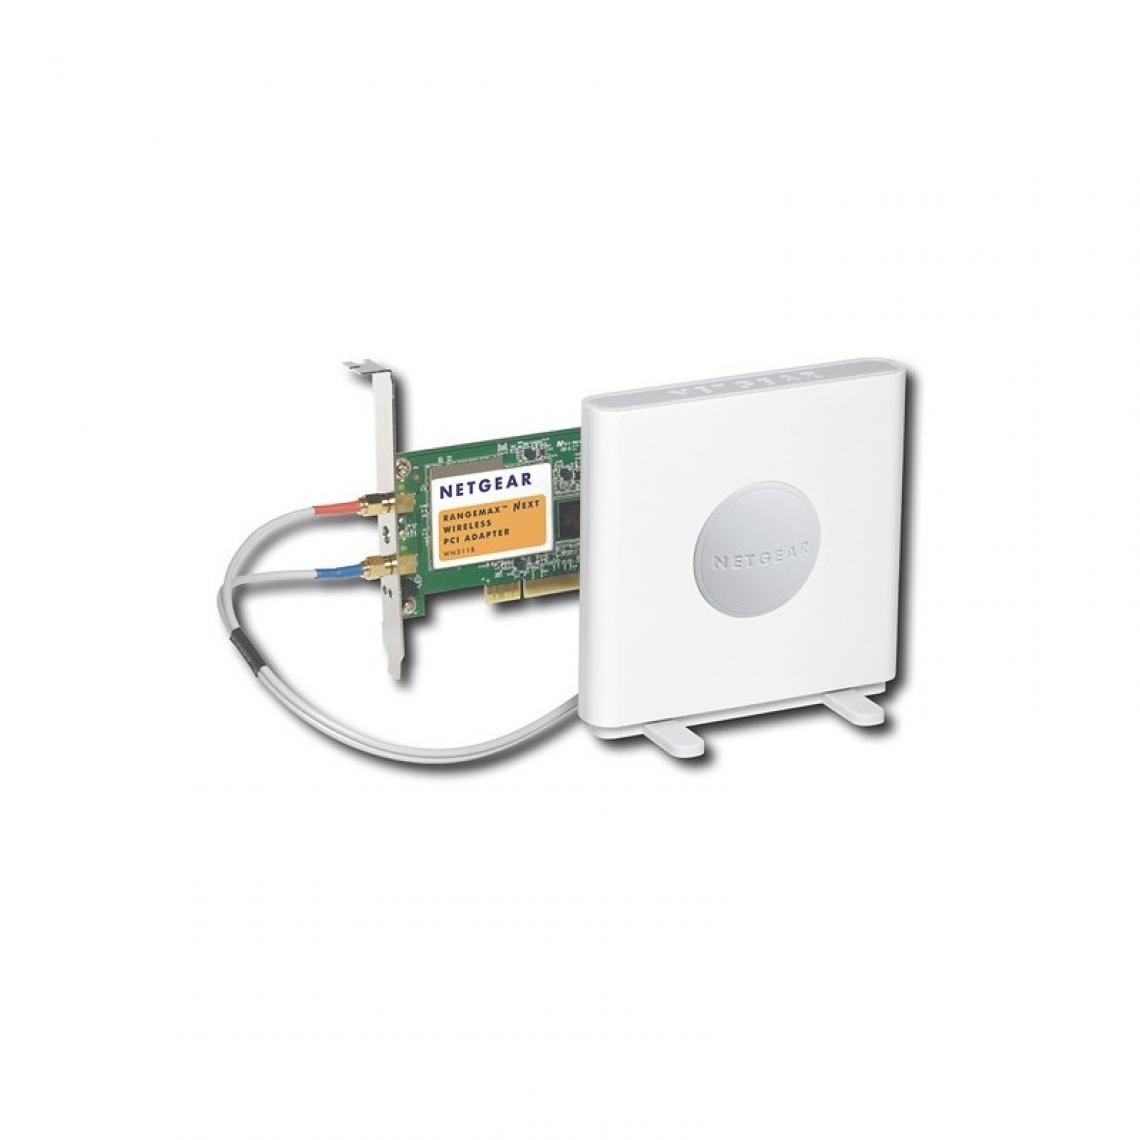 Netgear - Netgear Adaptateur N300 Wireless PCI sans fil - Switch